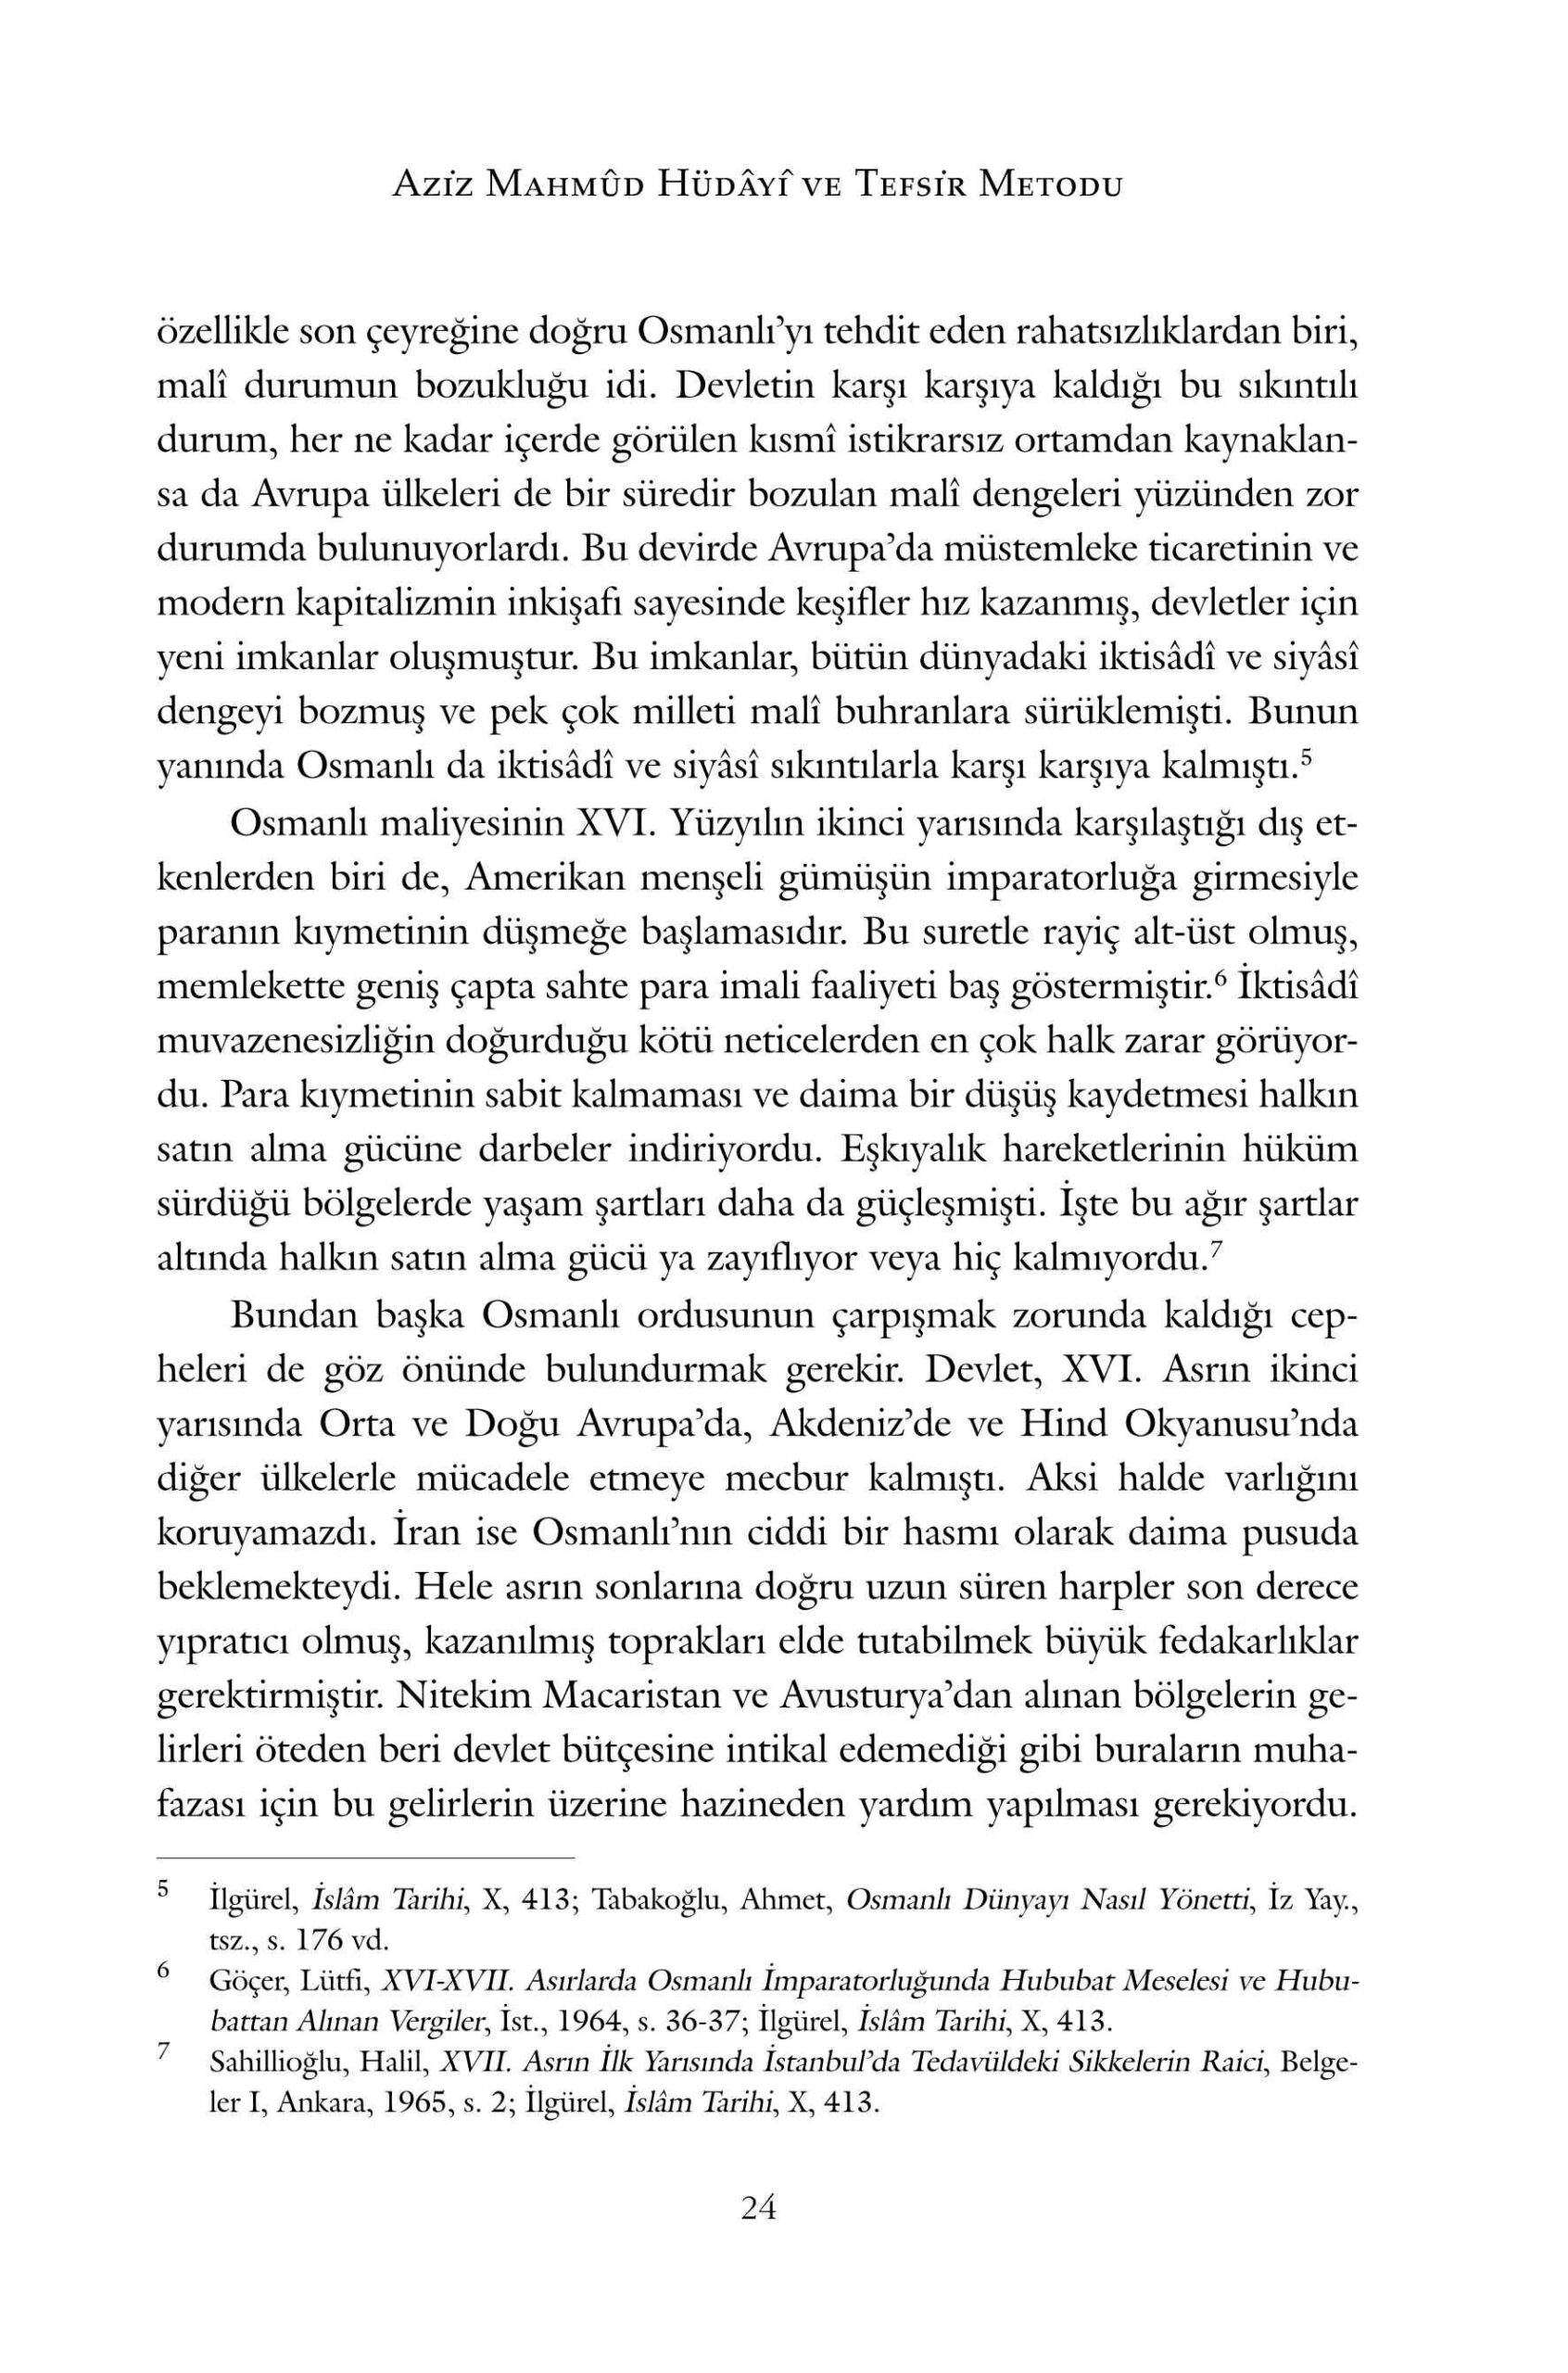 Omer Pakis - Aziz Mahmud Hudayi ve Tefsir Metodu - IsikAkademiY.pdf, 249-Sayfa 